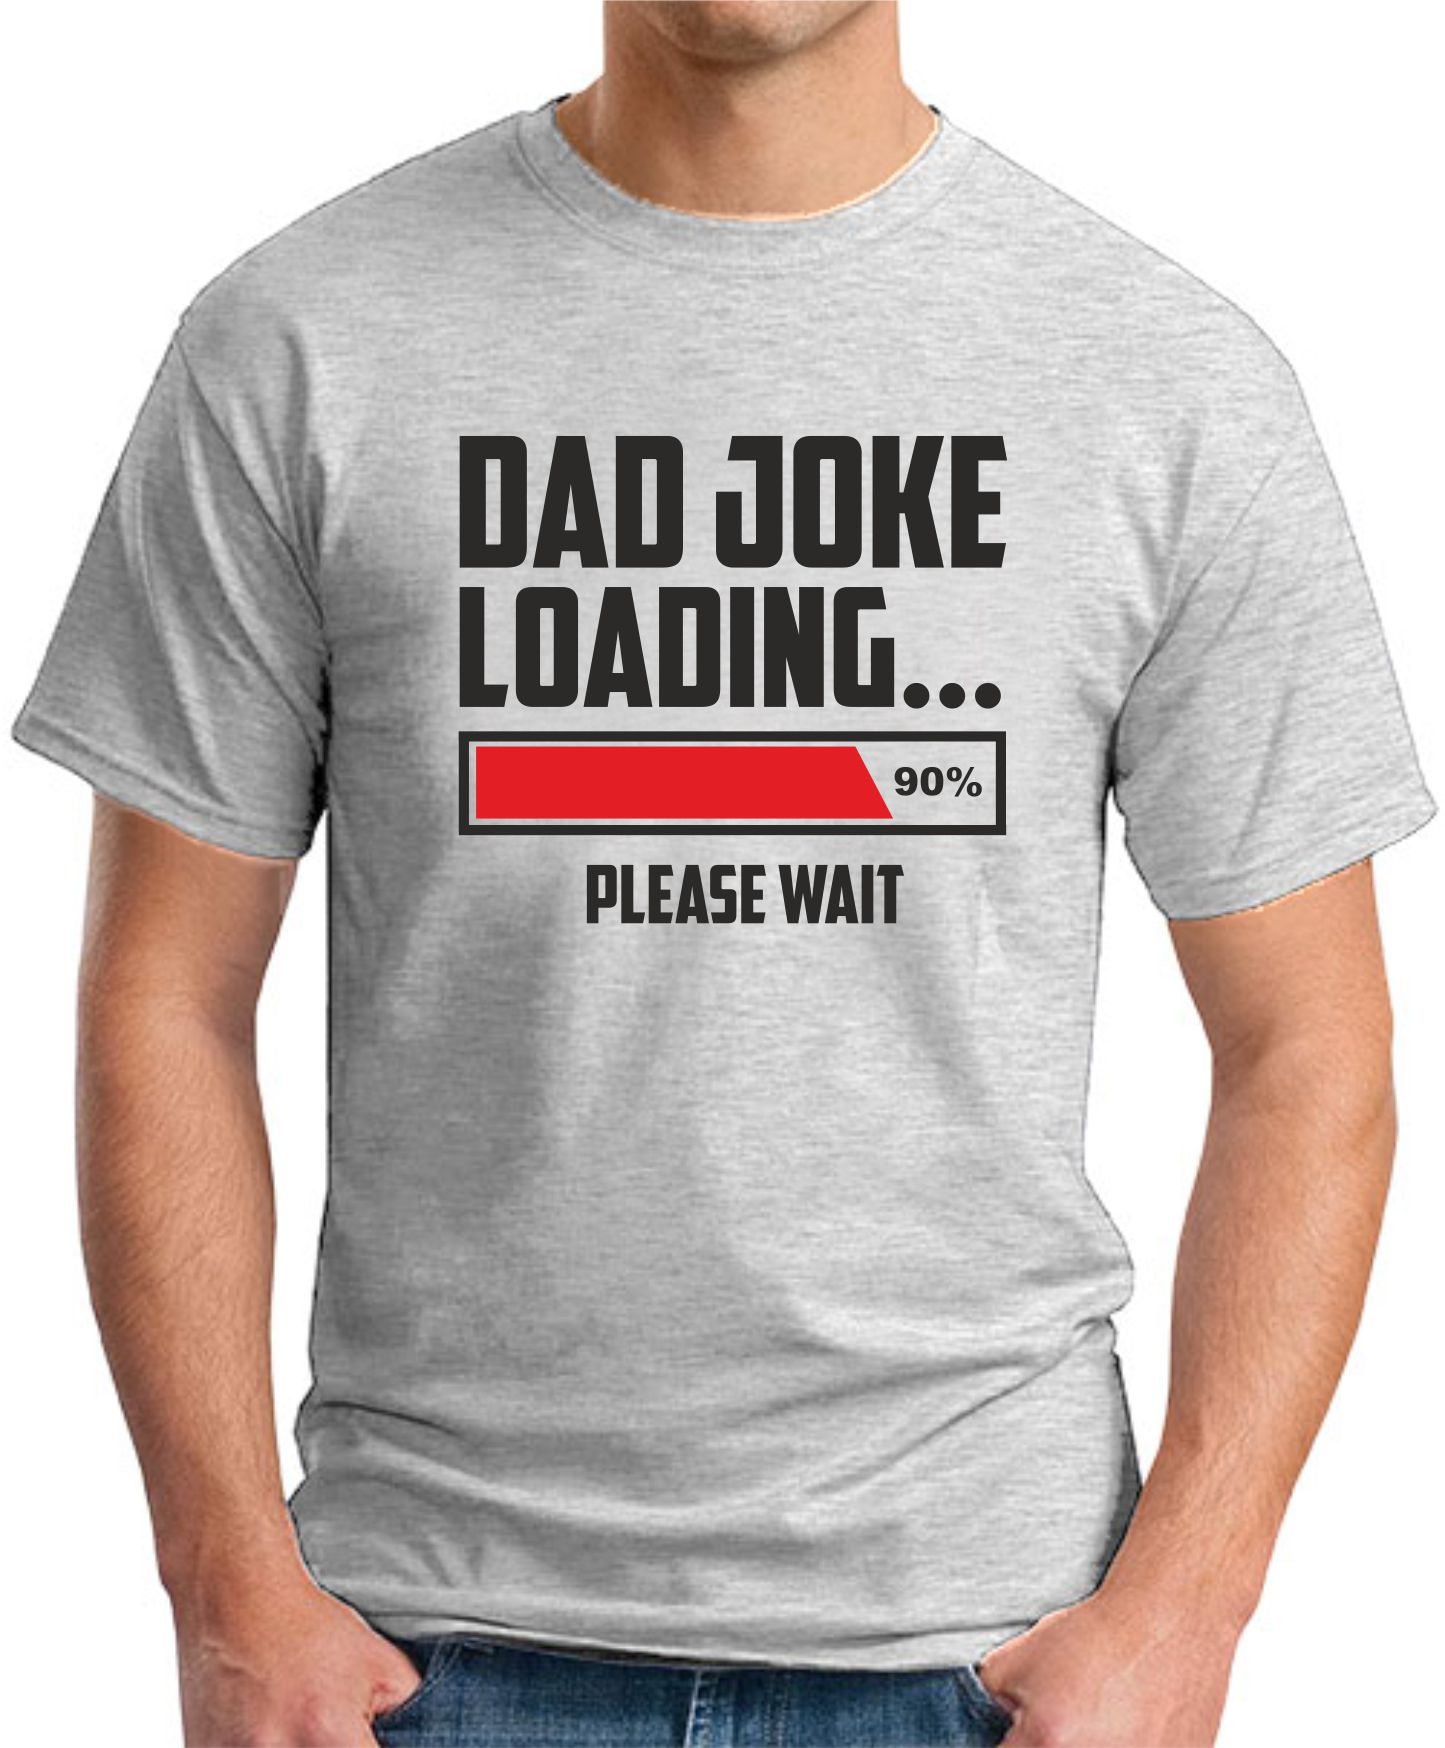 Download DAD JOKE LOADING T-SHIRT - GeekyTees